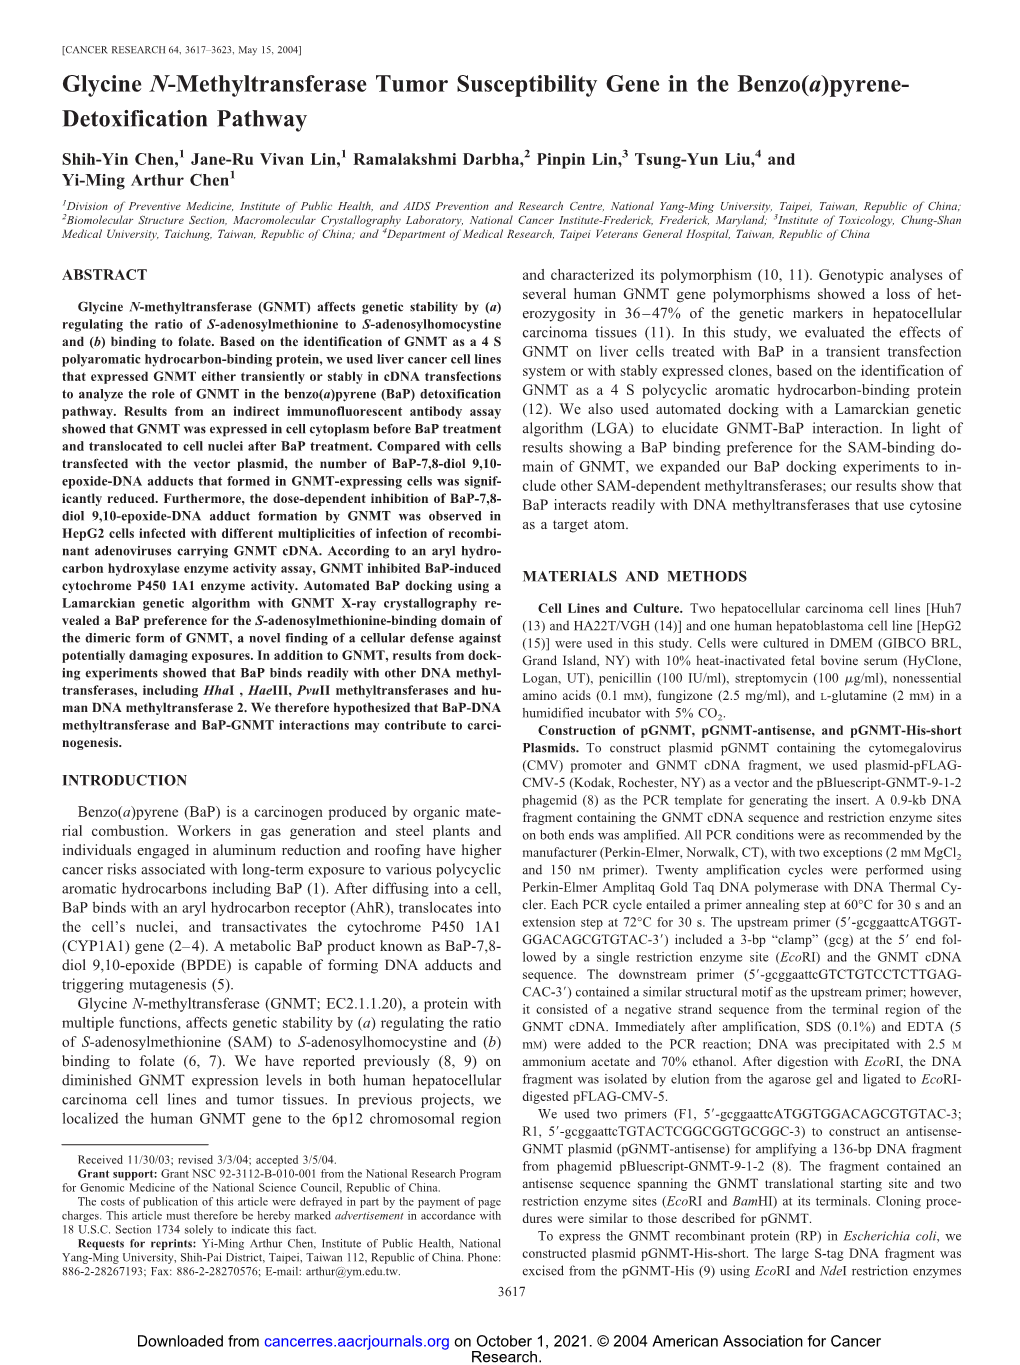 Glycine N-Methyltransferase Tumor Susceptibility Gene in the Benzo(A)Pyrene- Detoxification Pathway